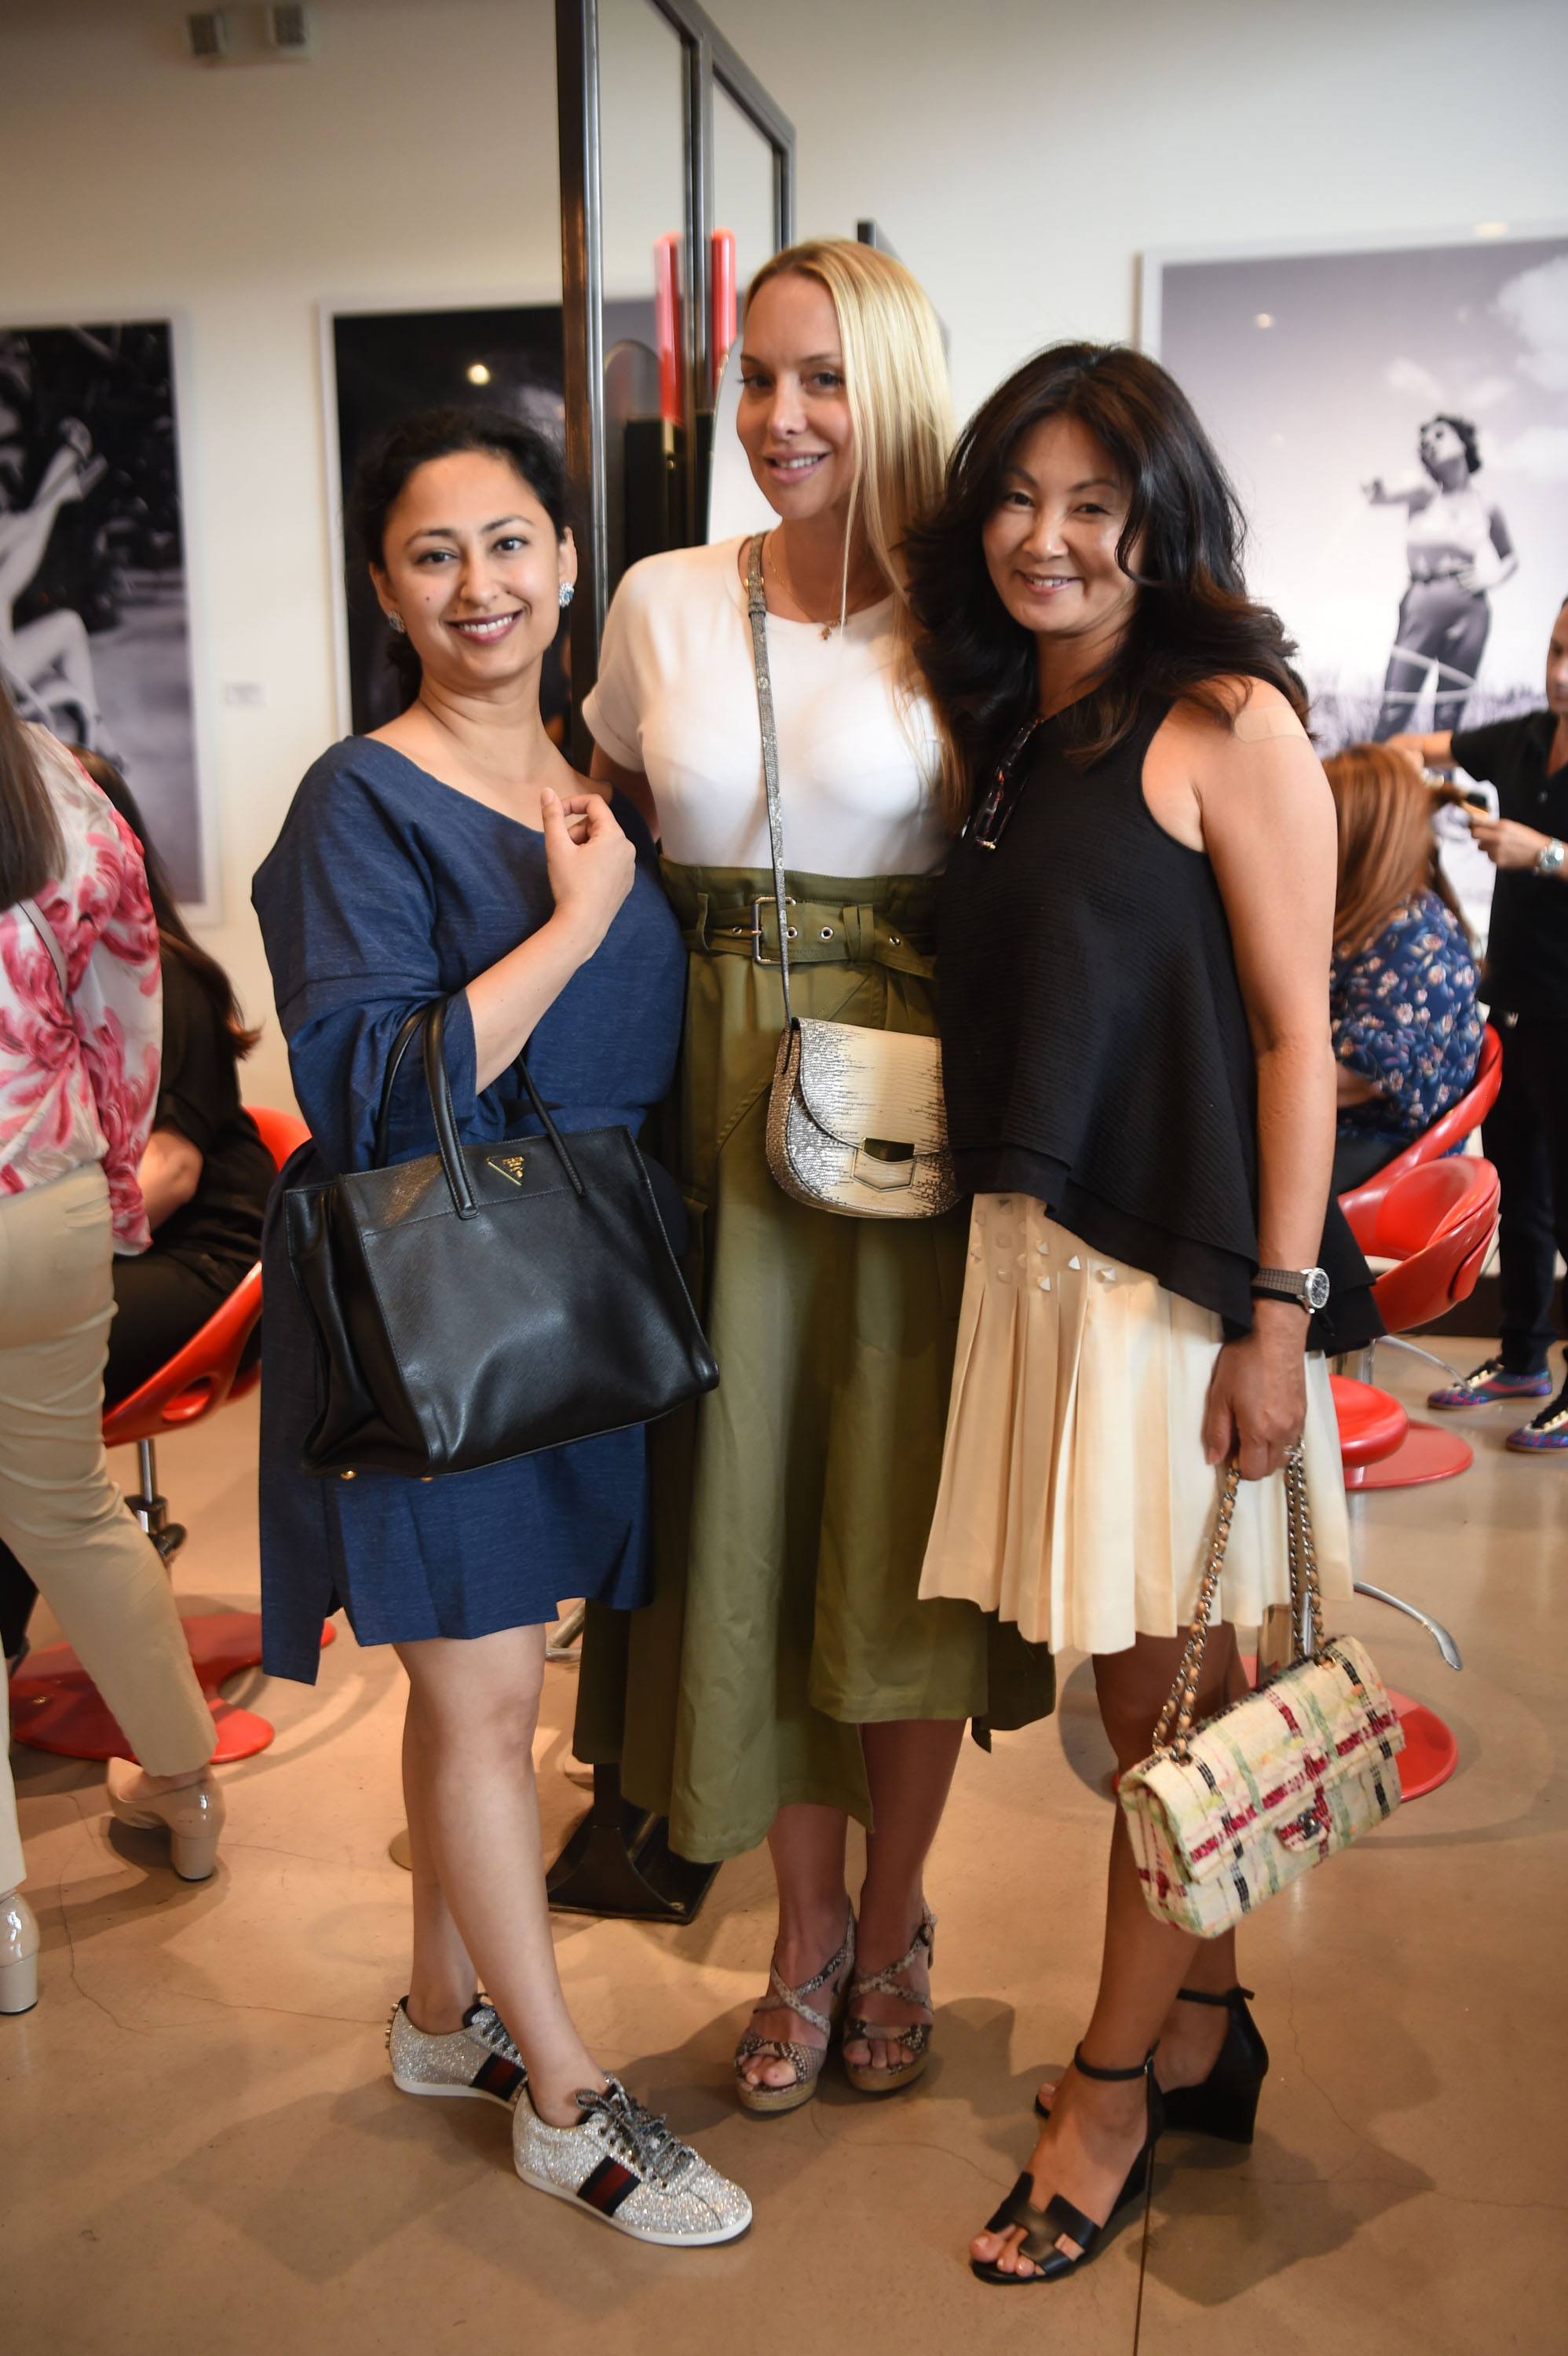 Ami Patel, Christina Getty, & Siri Willoch Traasdahl at Red Market Salon celebrating Wine, Women & Shoes